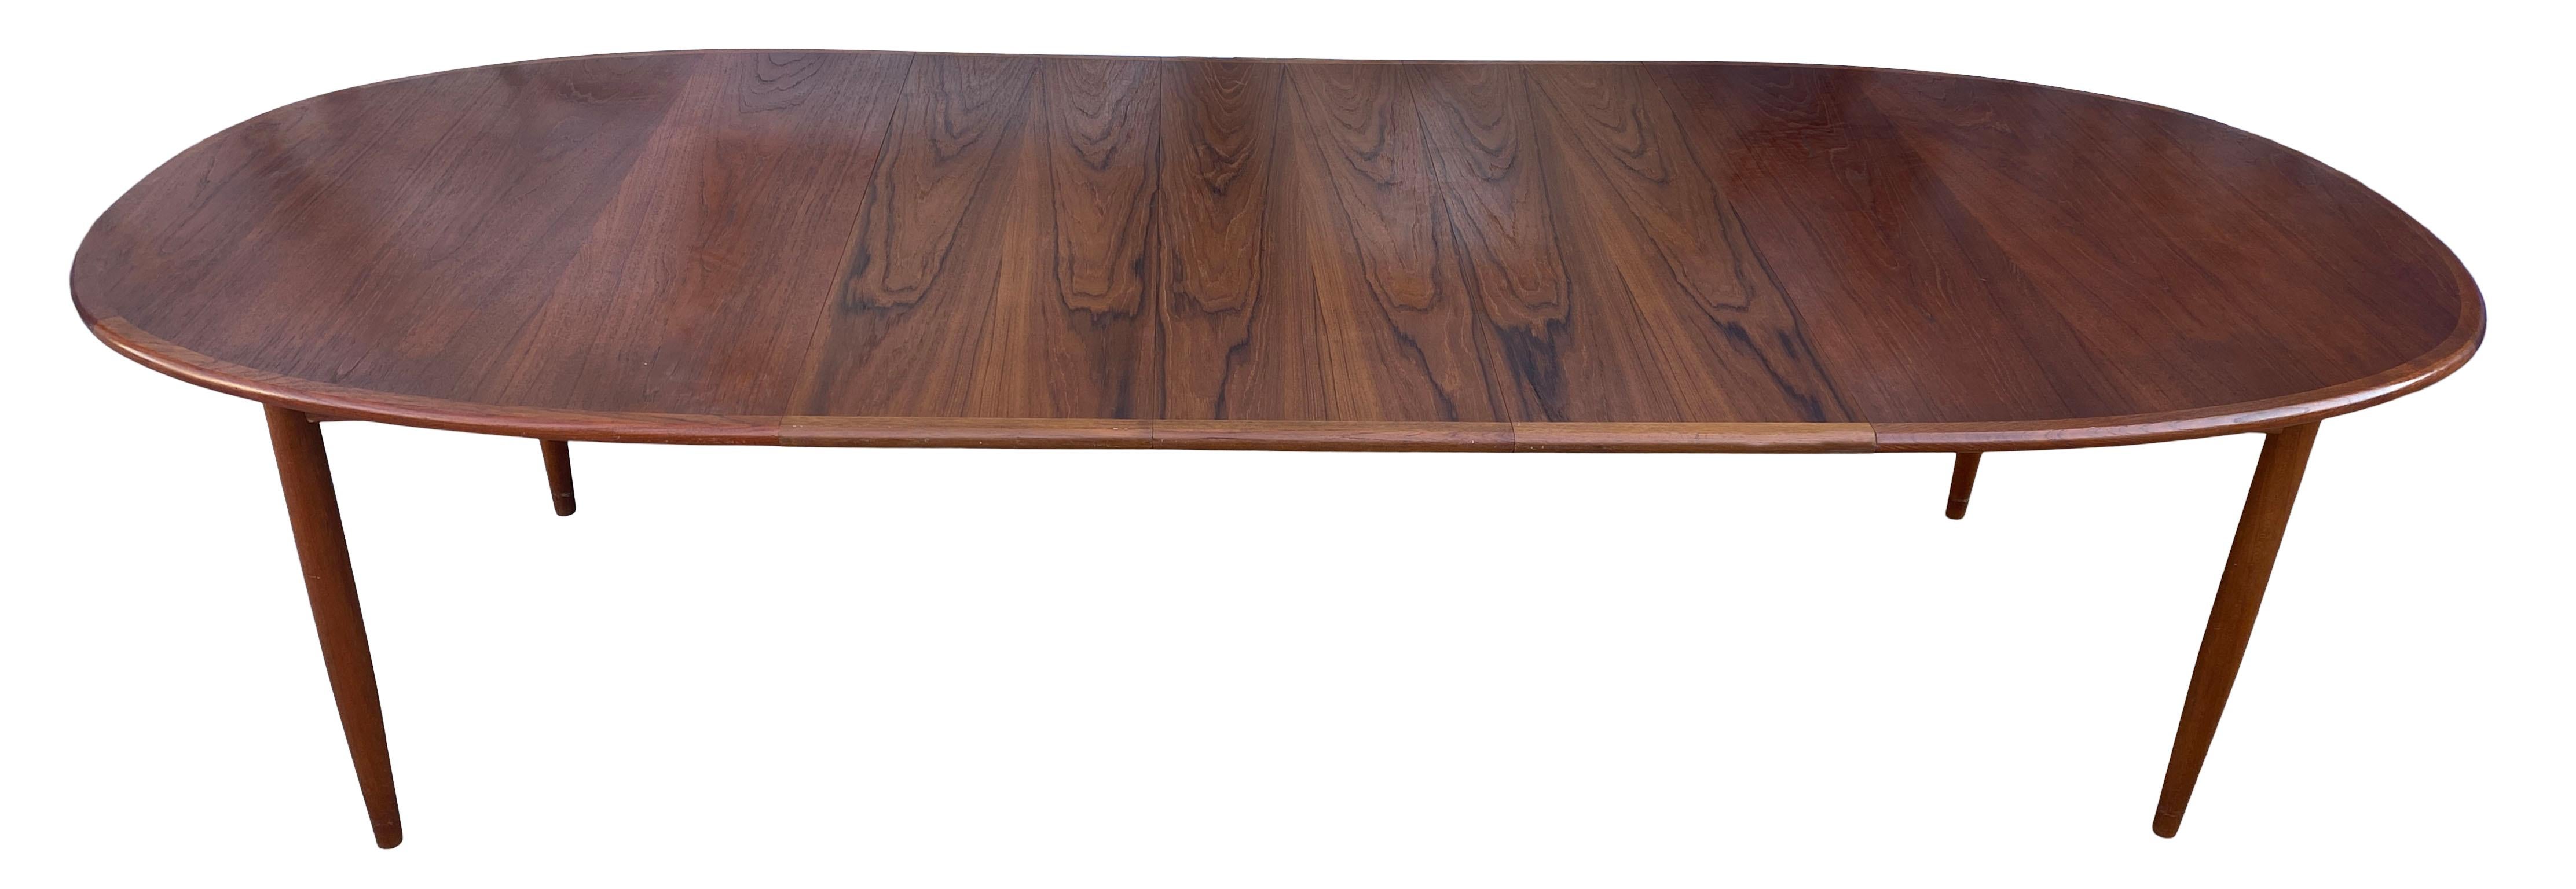 Mid-20th Century Midcentury Elliptical Large Oval Danish Teak Expandable Dining Table '3' Leaves